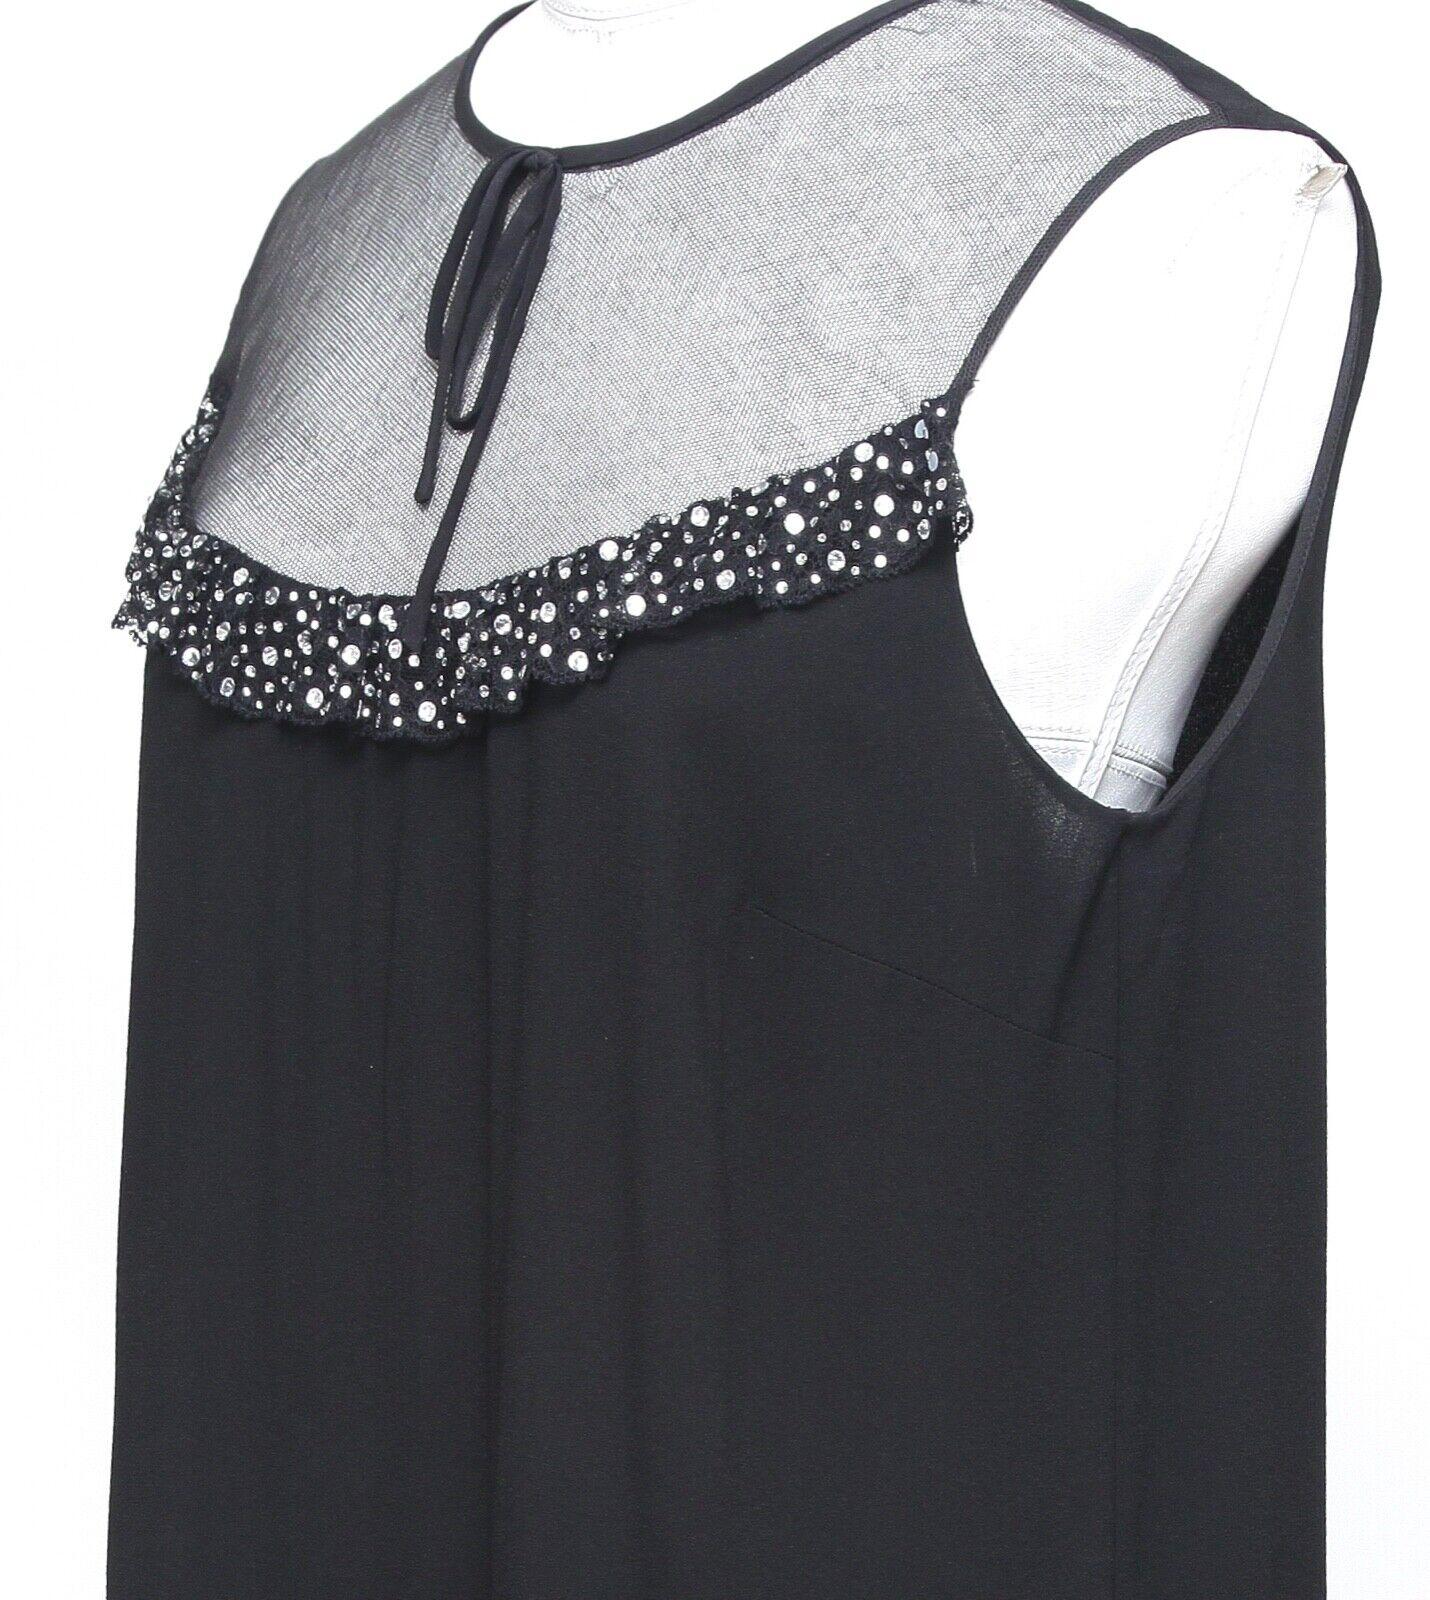 MIU MIU Top Blouse Shirt Sleeveless Black Viscose Tie Sequin Sz 42 NWT For Sale 2